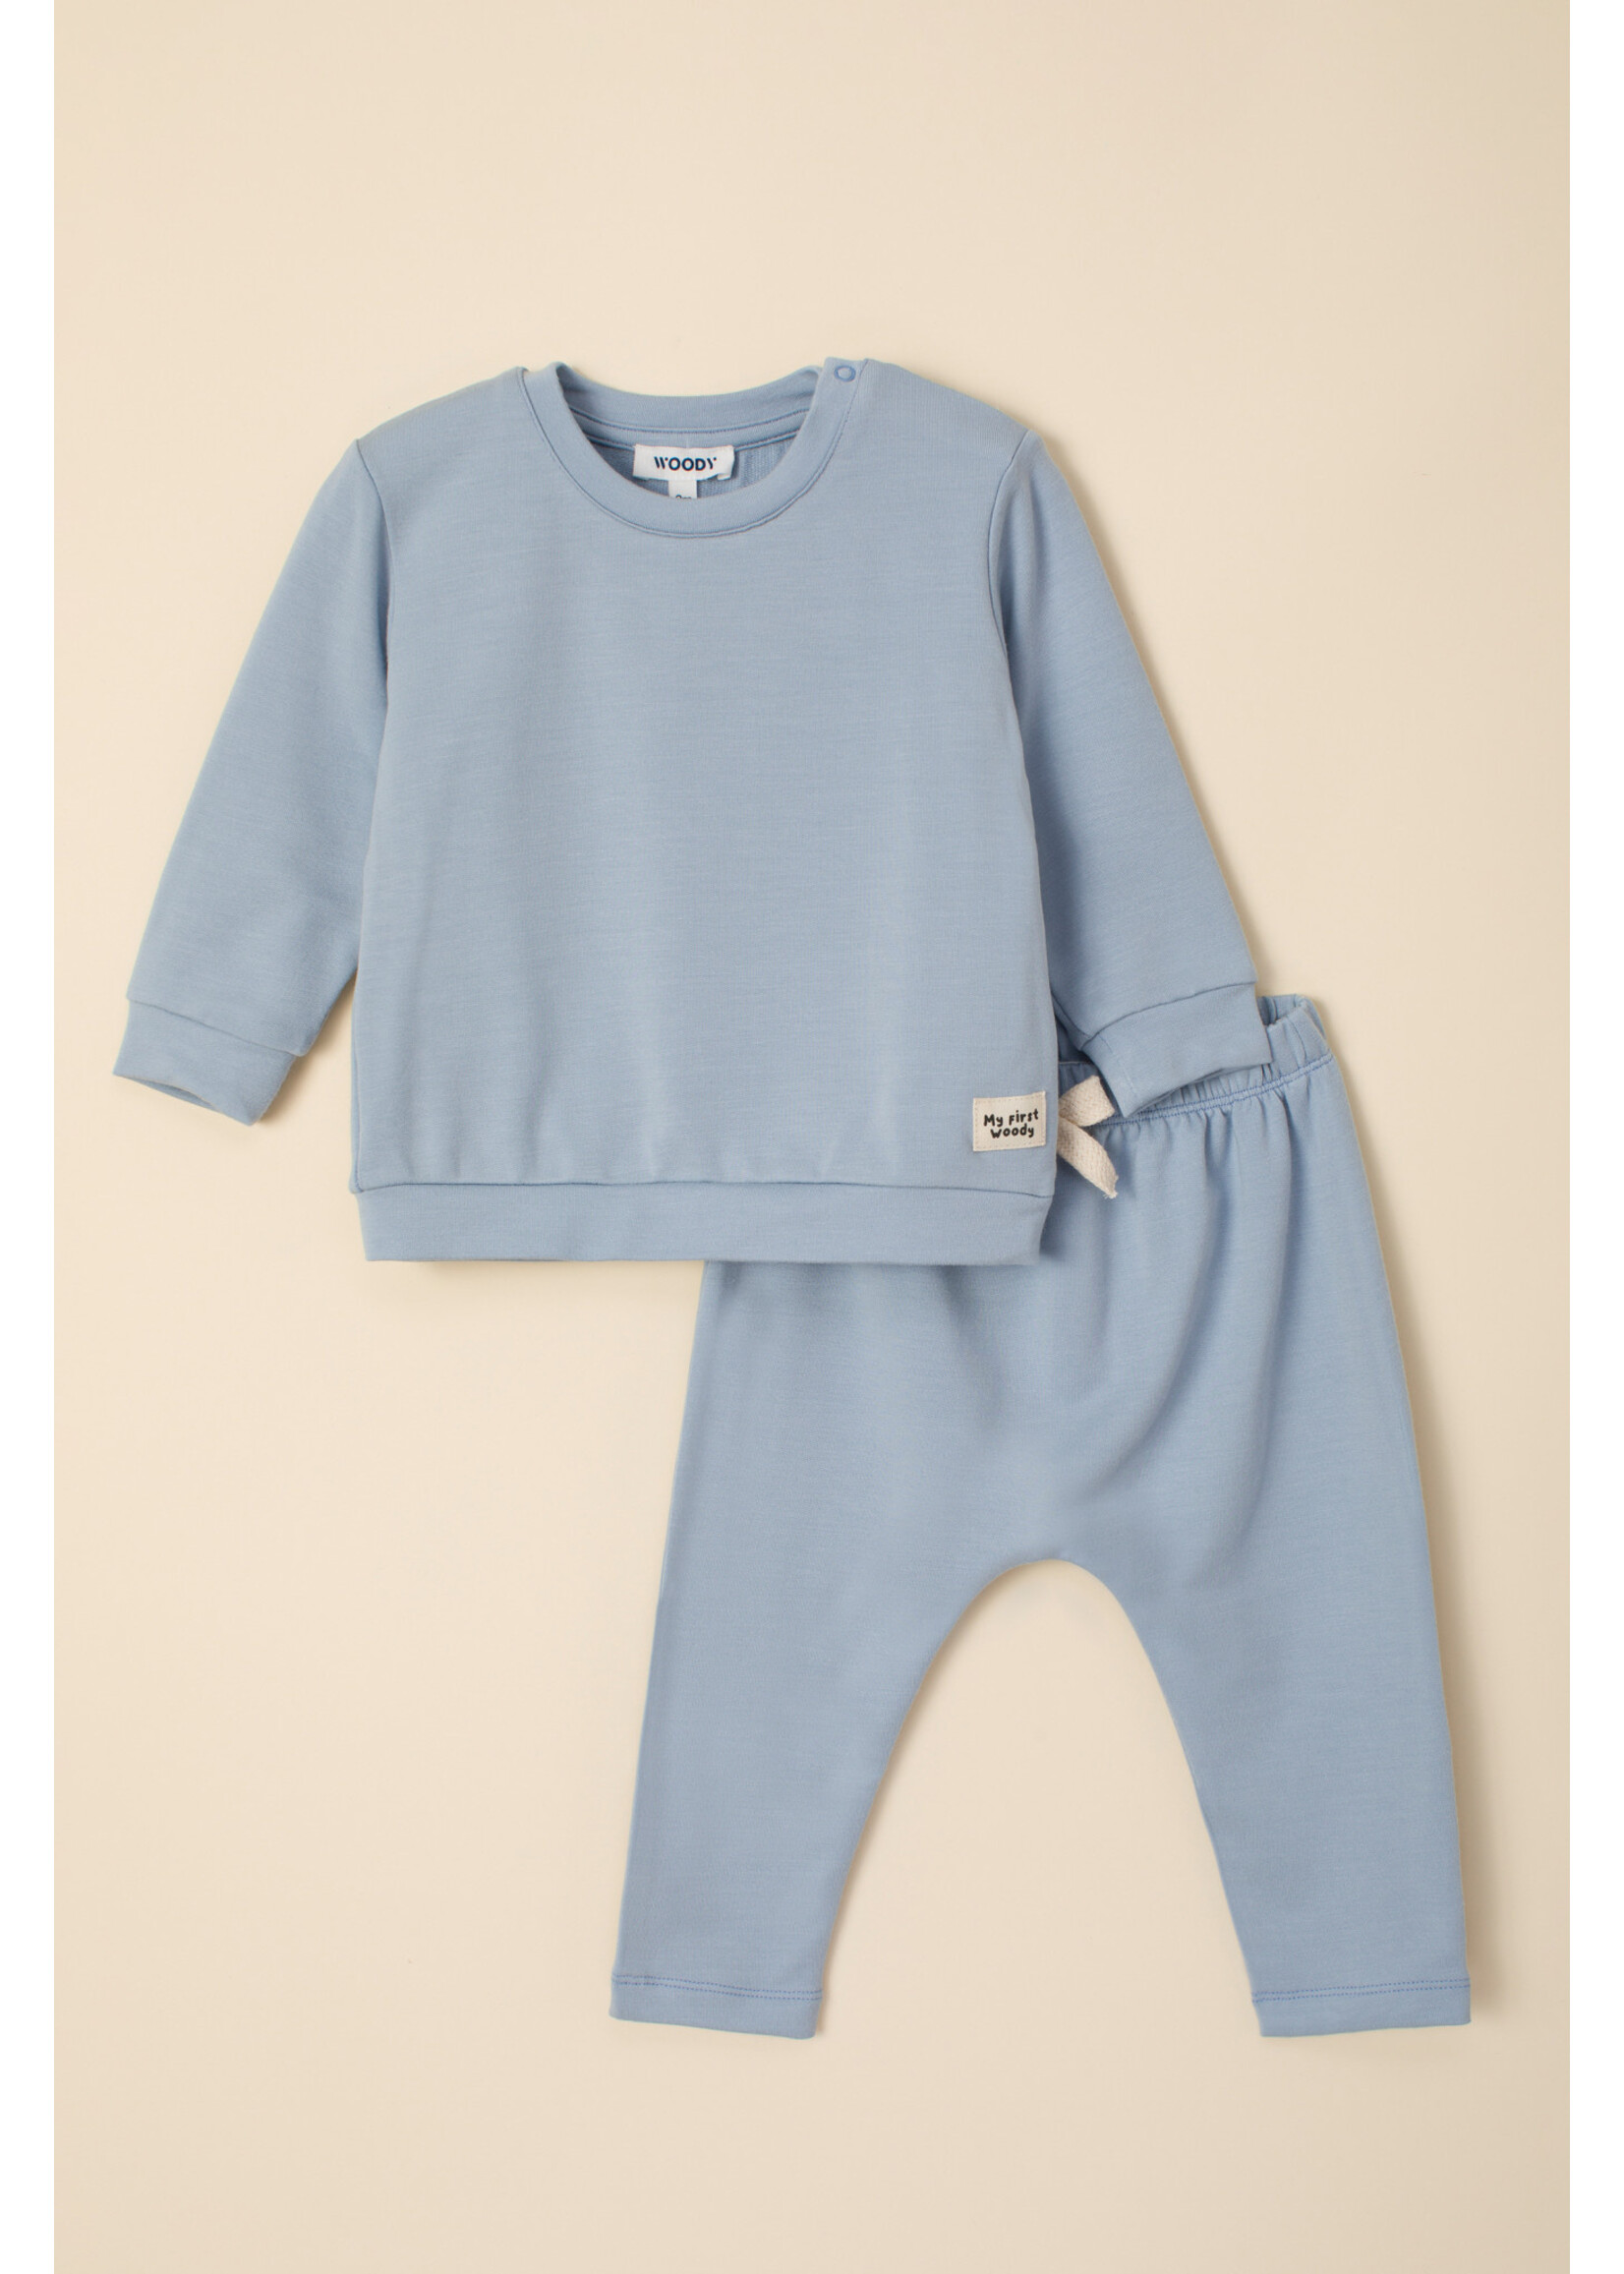 Woody Woody Unisex Pyjama pastelblauw